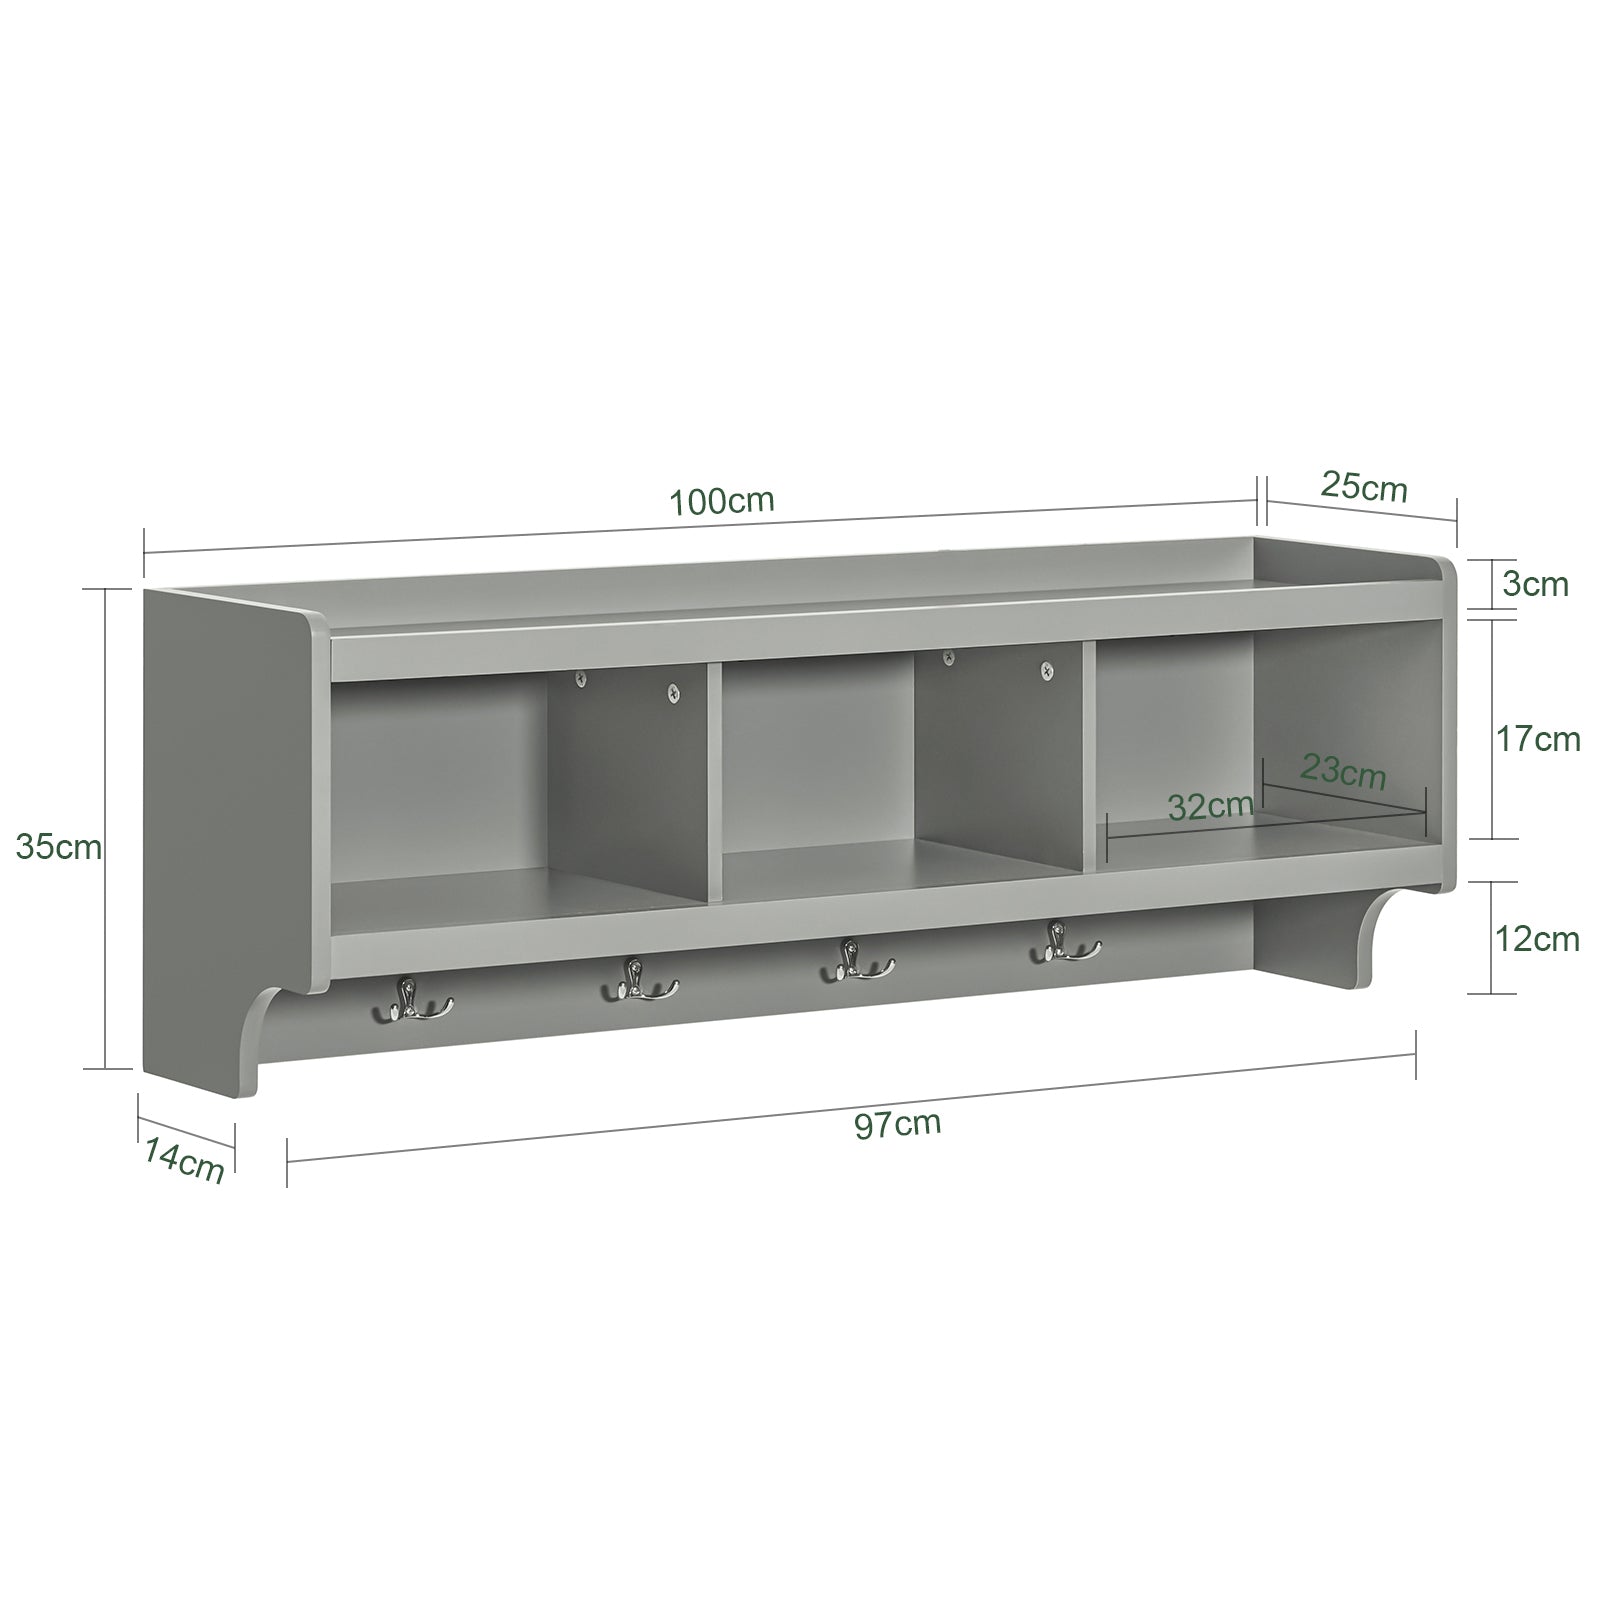 SoBuy FHK28-HG, Wall Coat Rack Wall Shelf Wall Storage Cabinet Unit with Hooks